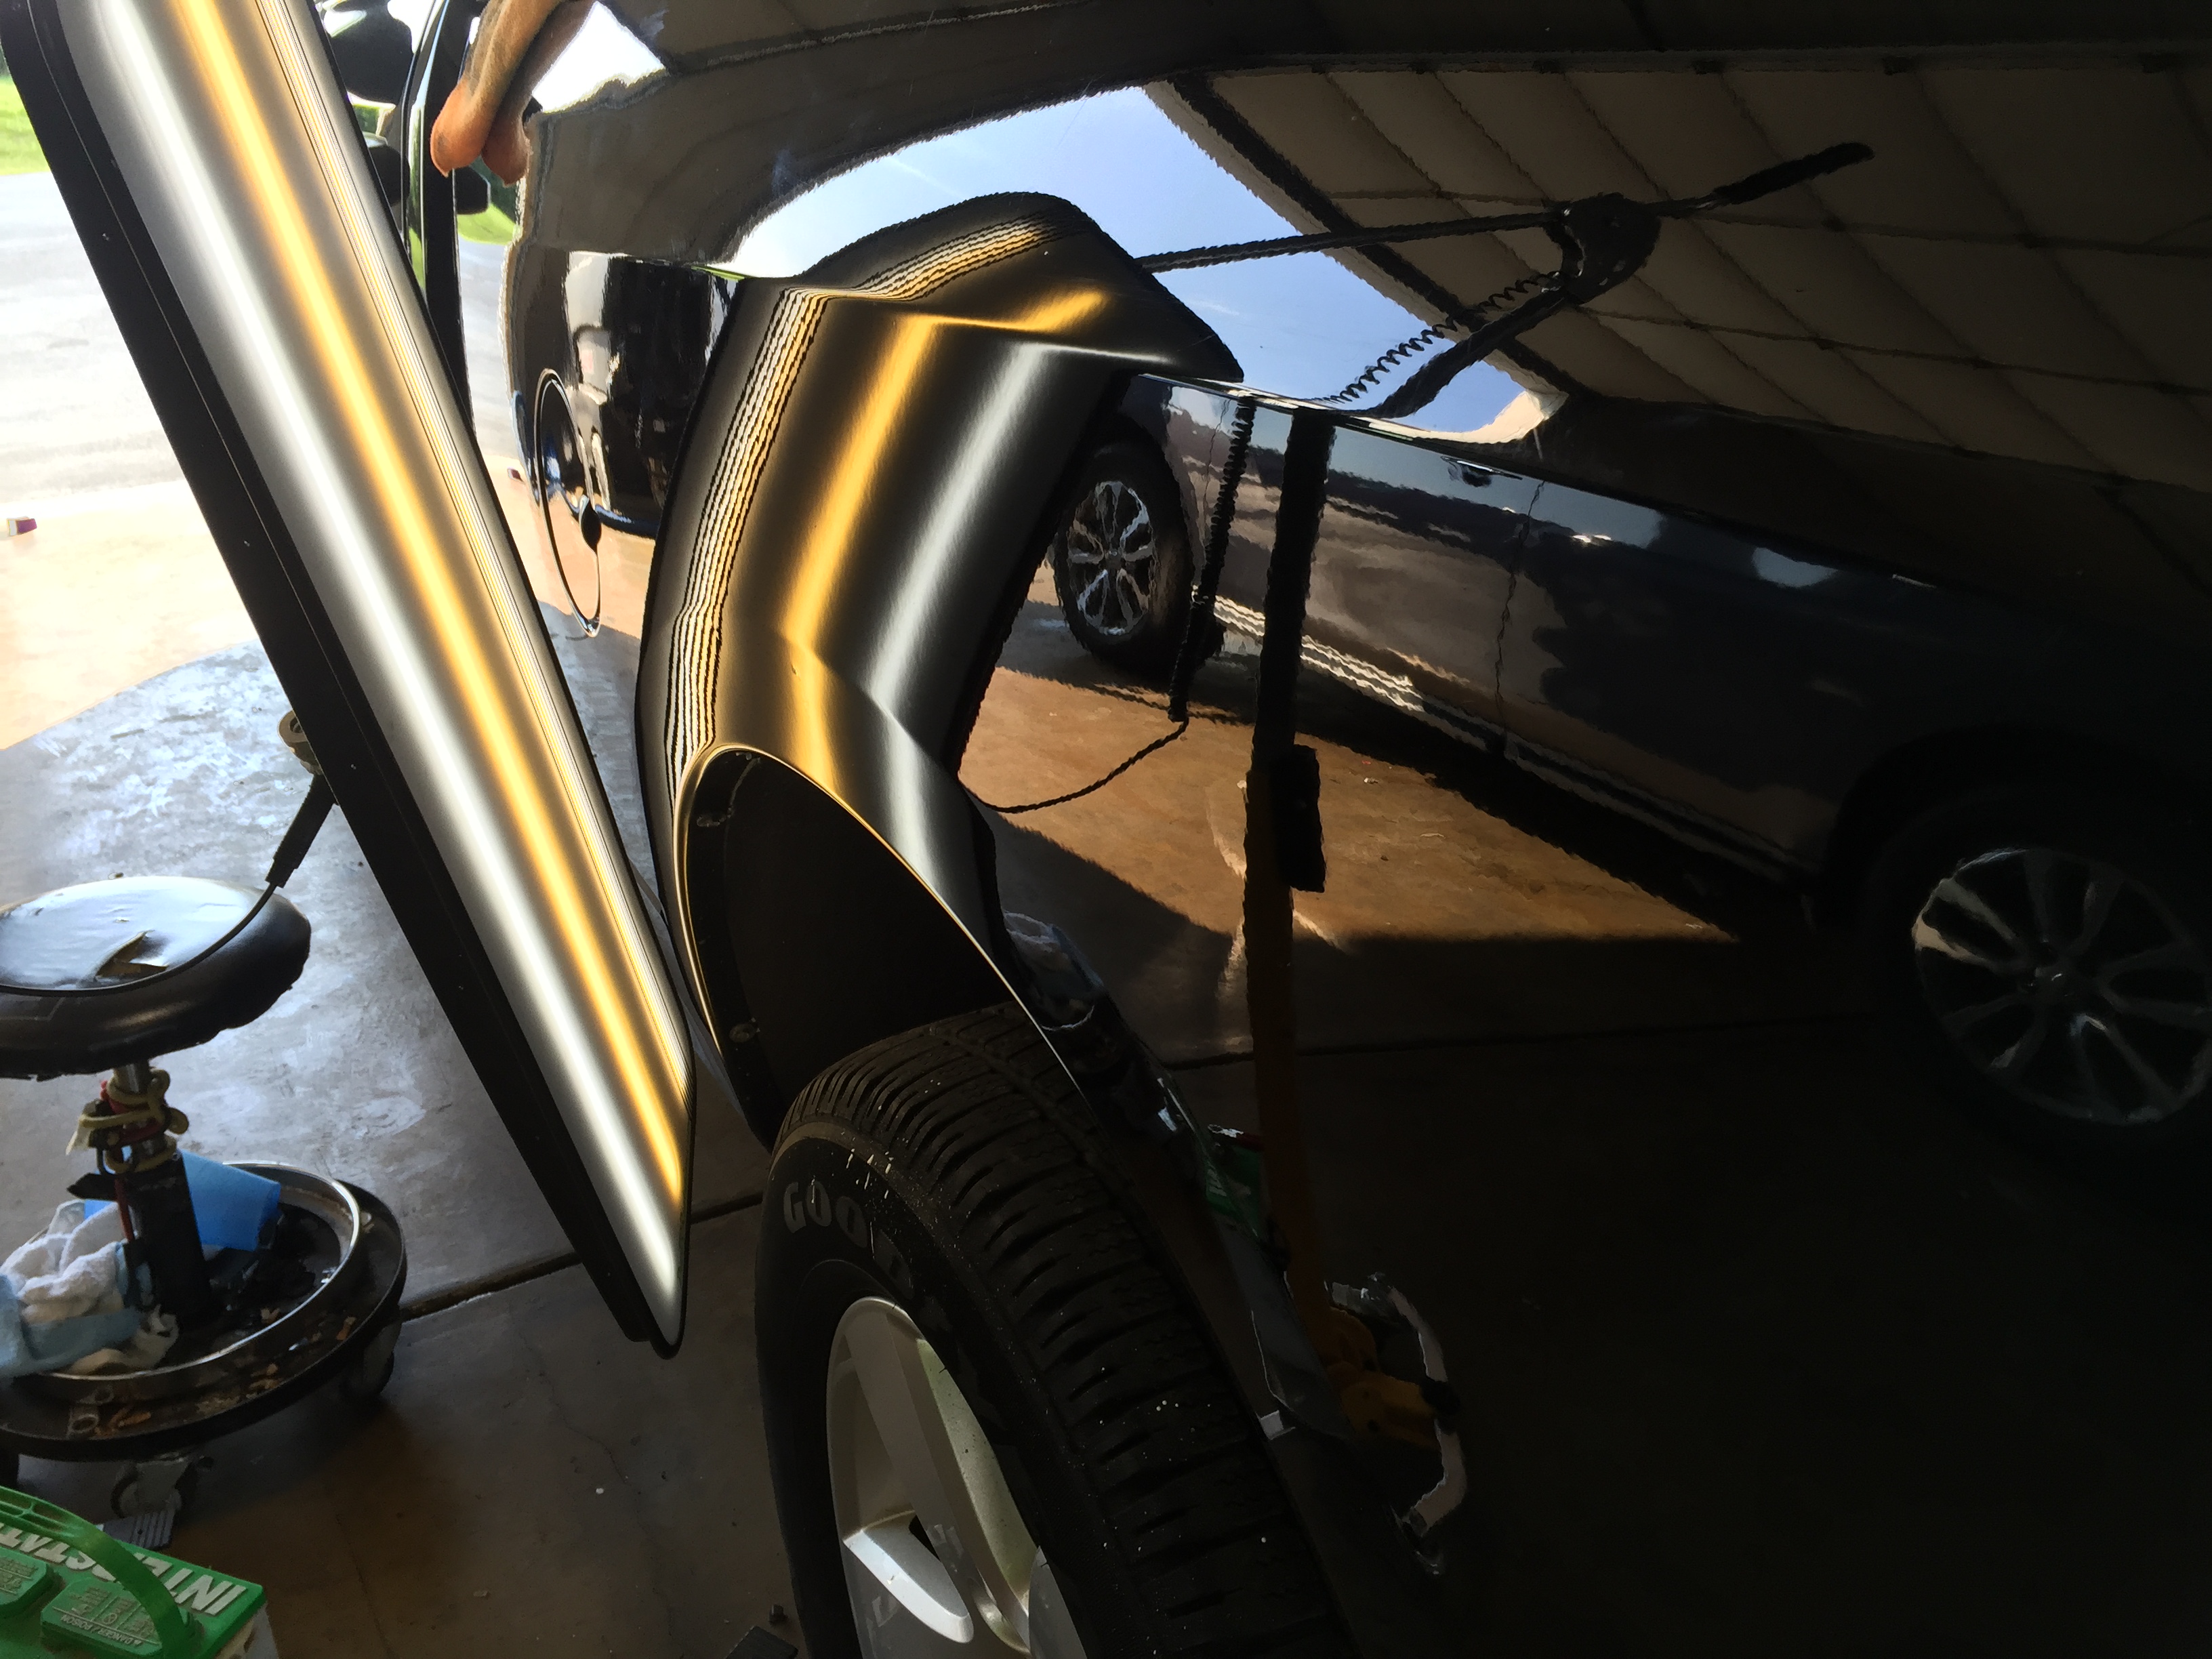 2012 Dodge Ram Bedside Damage, Paintless Dent Repair, Springfield, IL. http://217dent.com